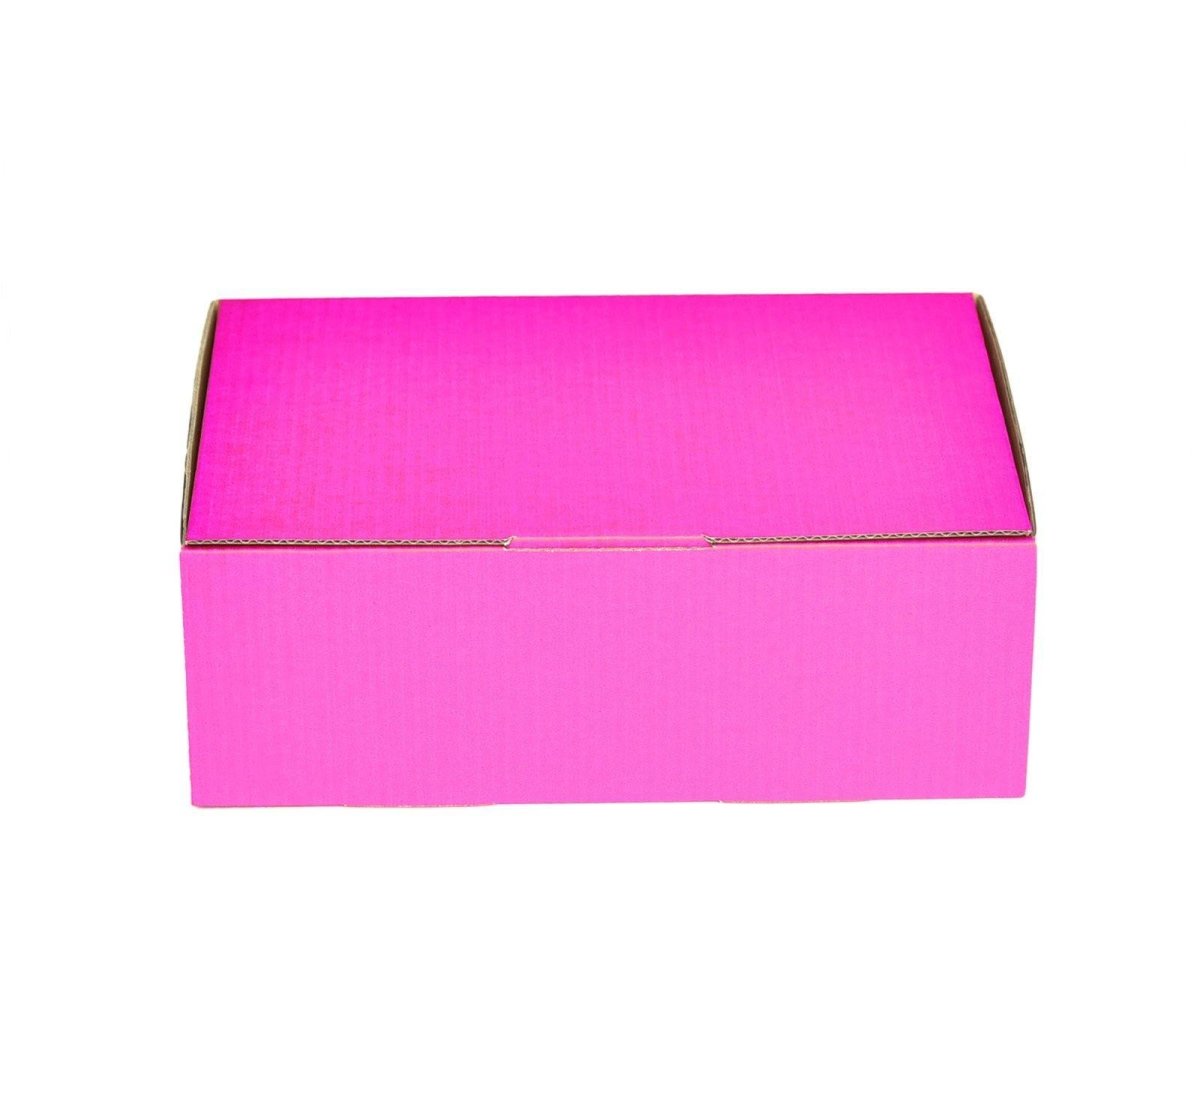 220 x 160 x 77mm A5 Die cut Watermelon Pink Mailing Box B209